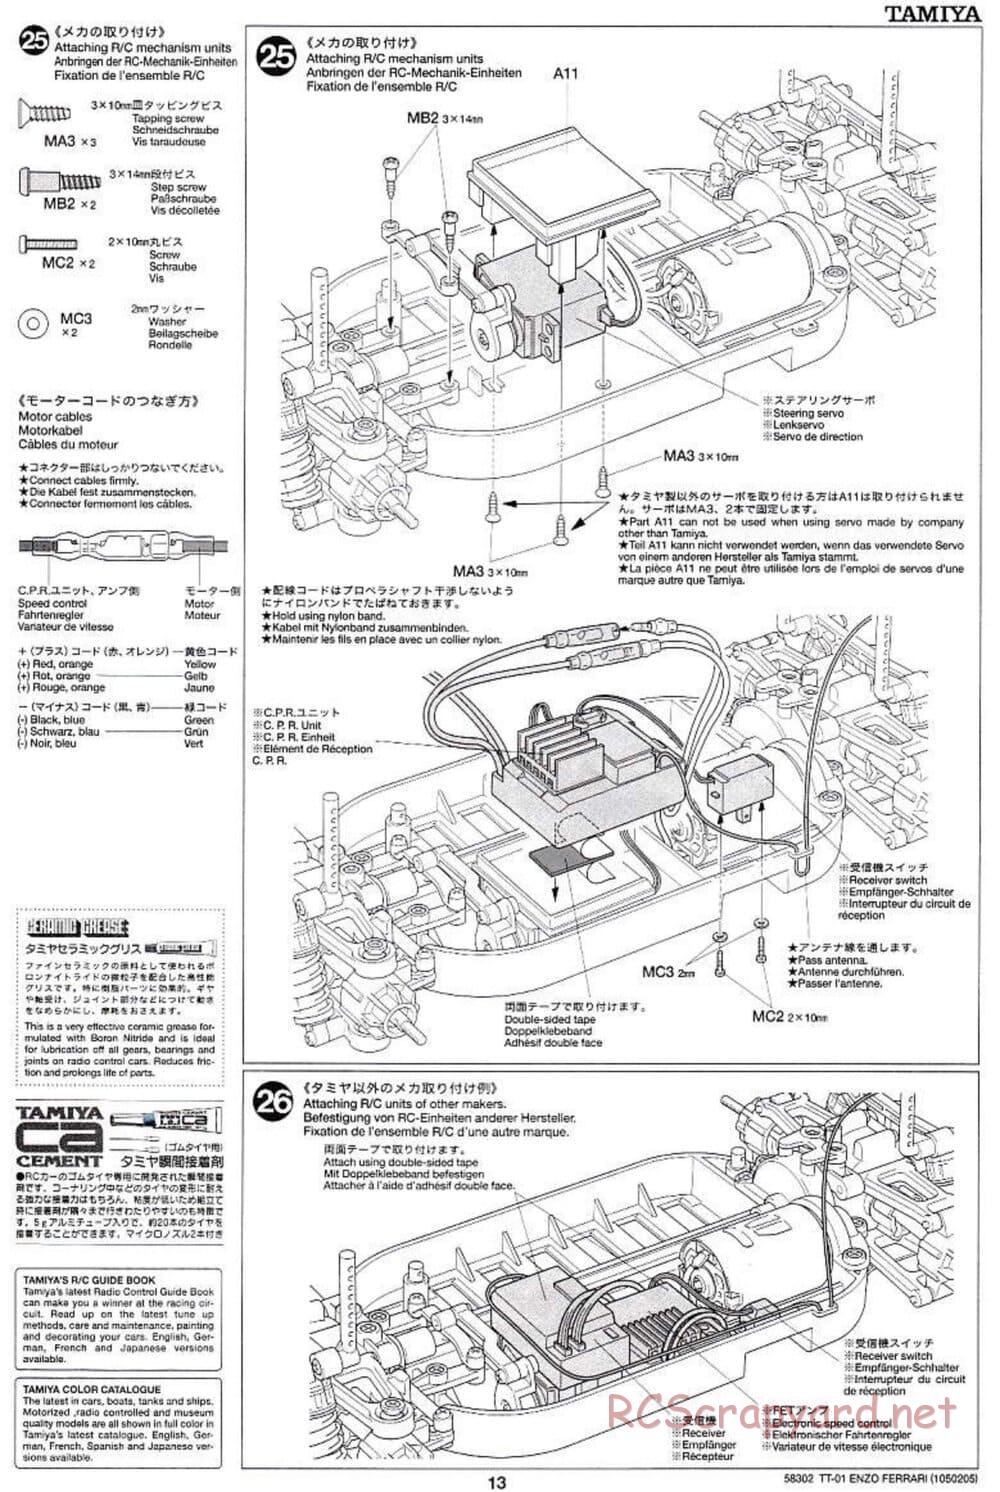 Tamiya - Enzo Ferrari - TT-01 Chassis - Manual - Page 13